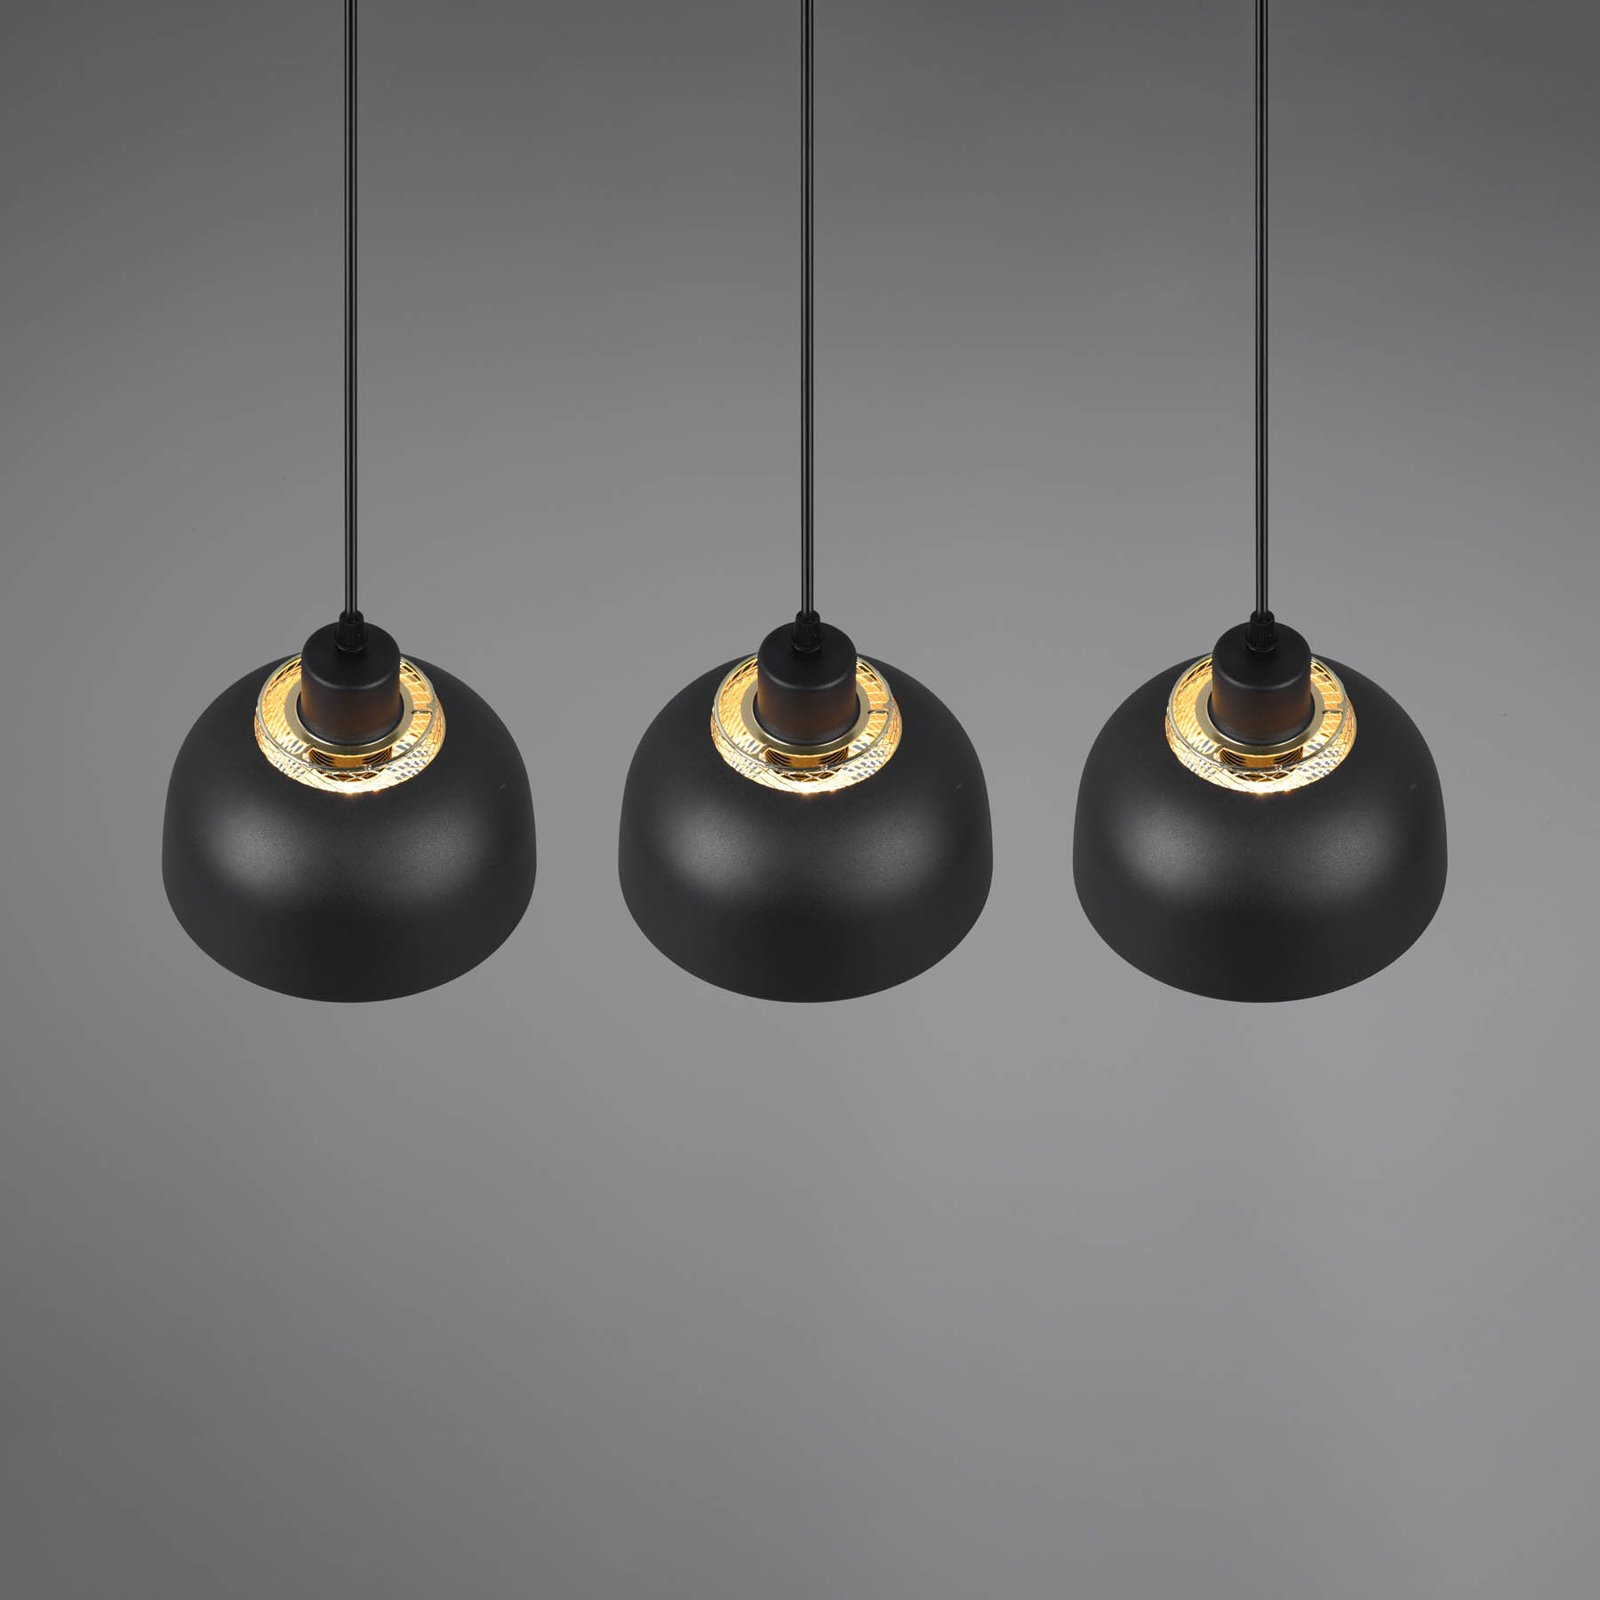 Punch pendant light, black/gold, three-bulb